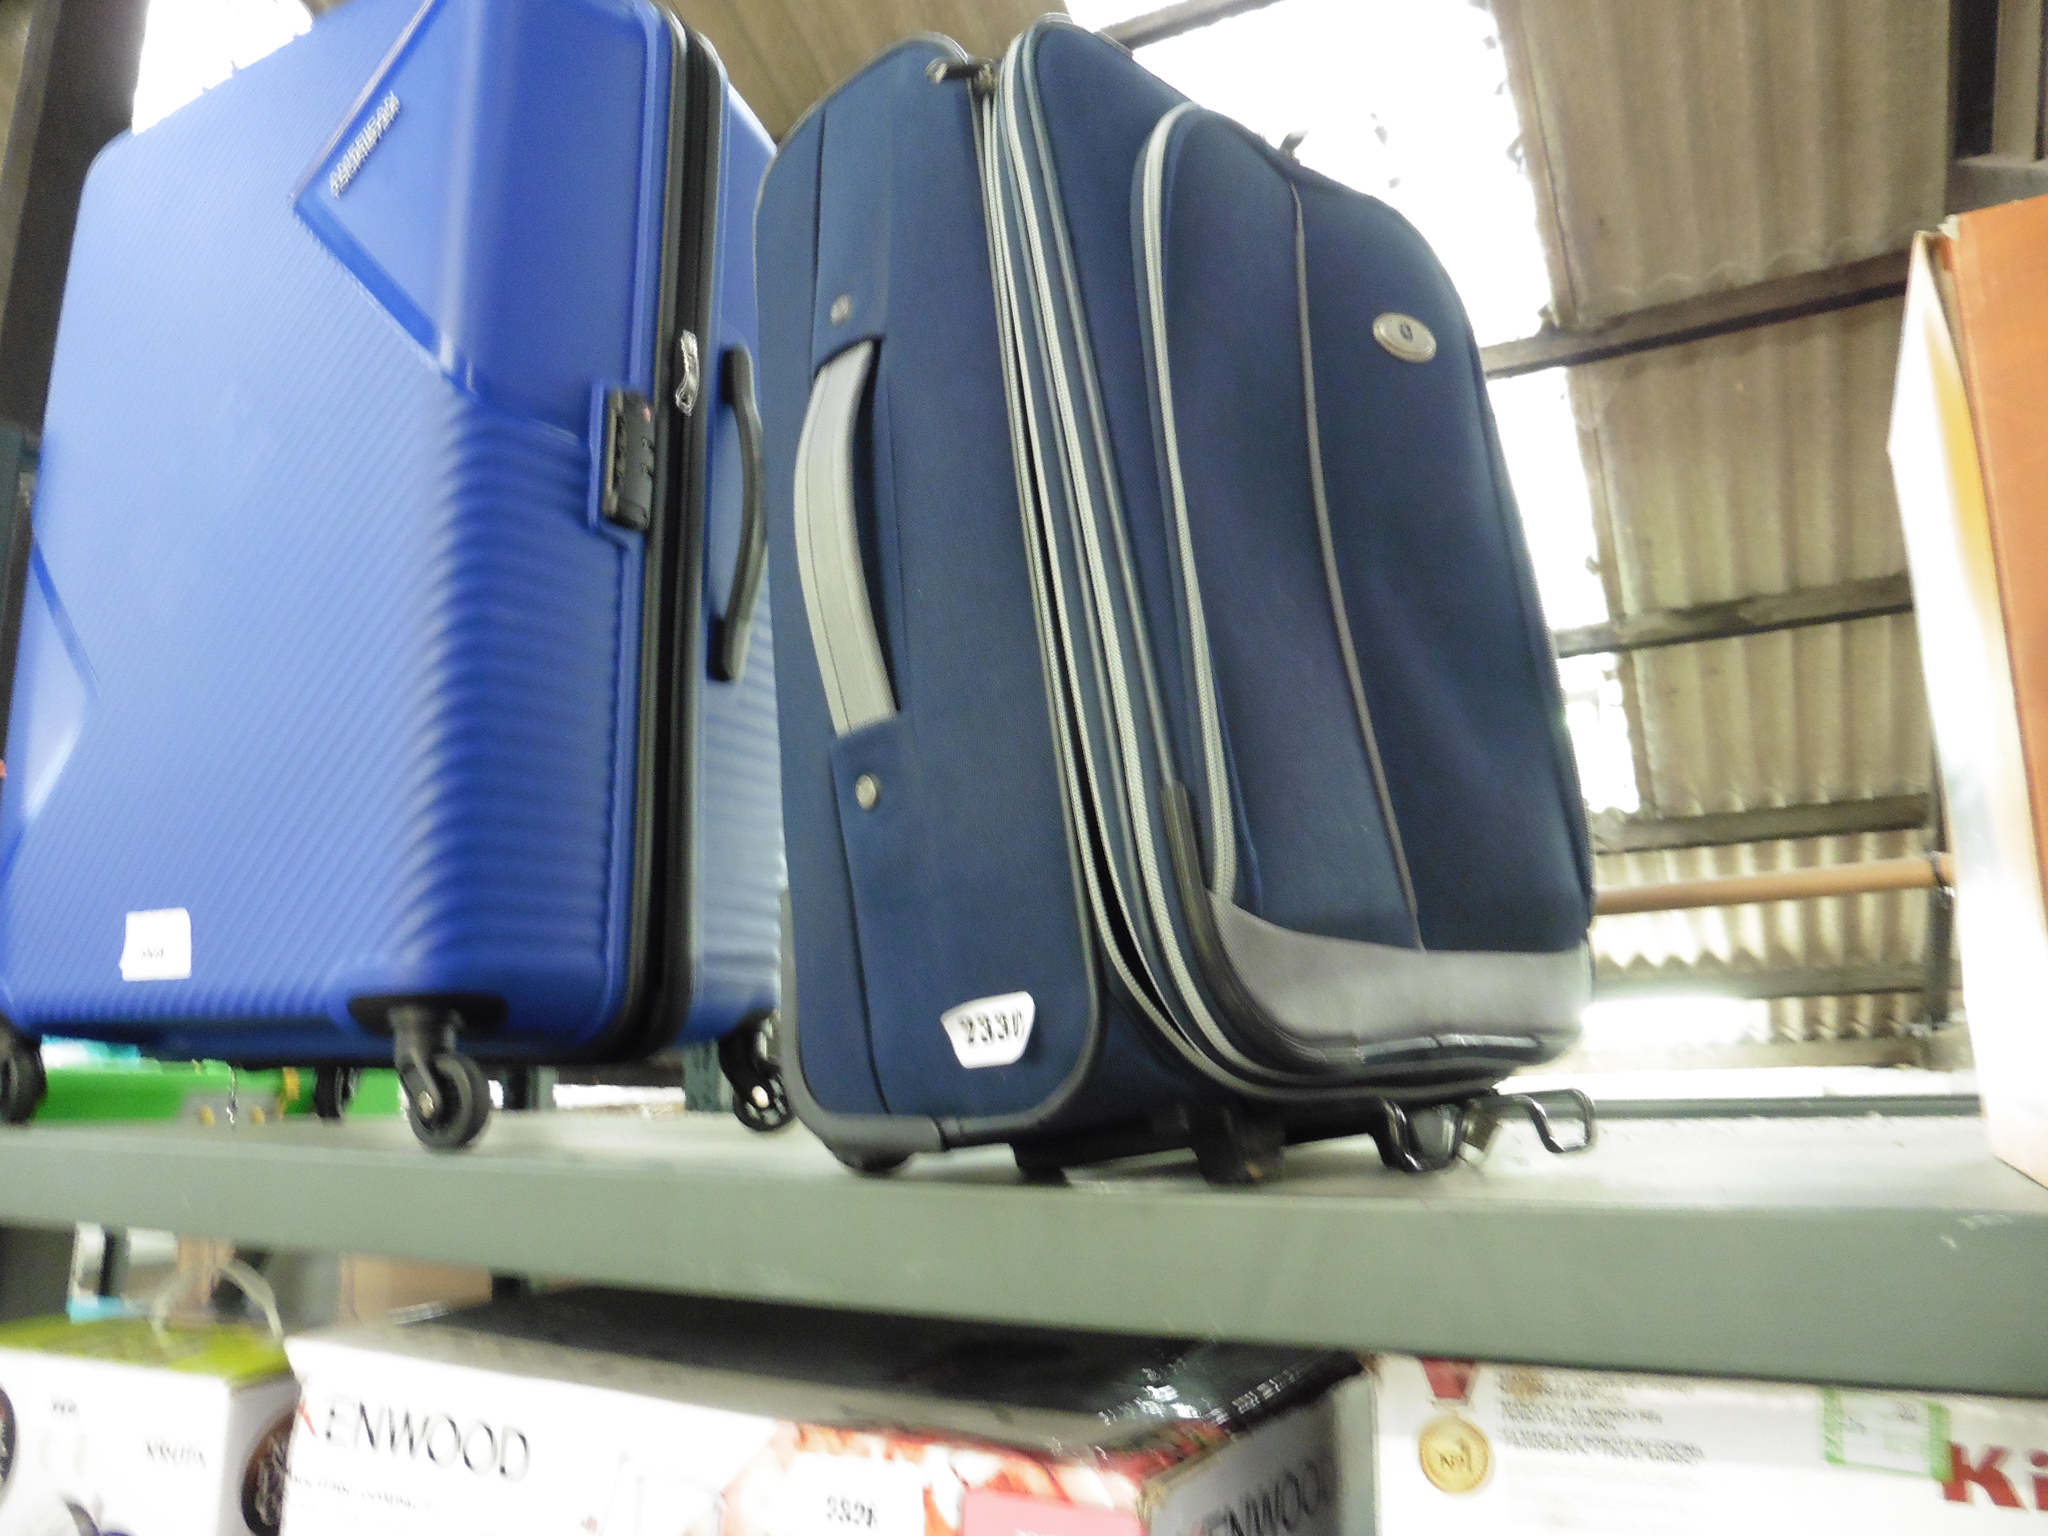 Blue suitcase on wheels